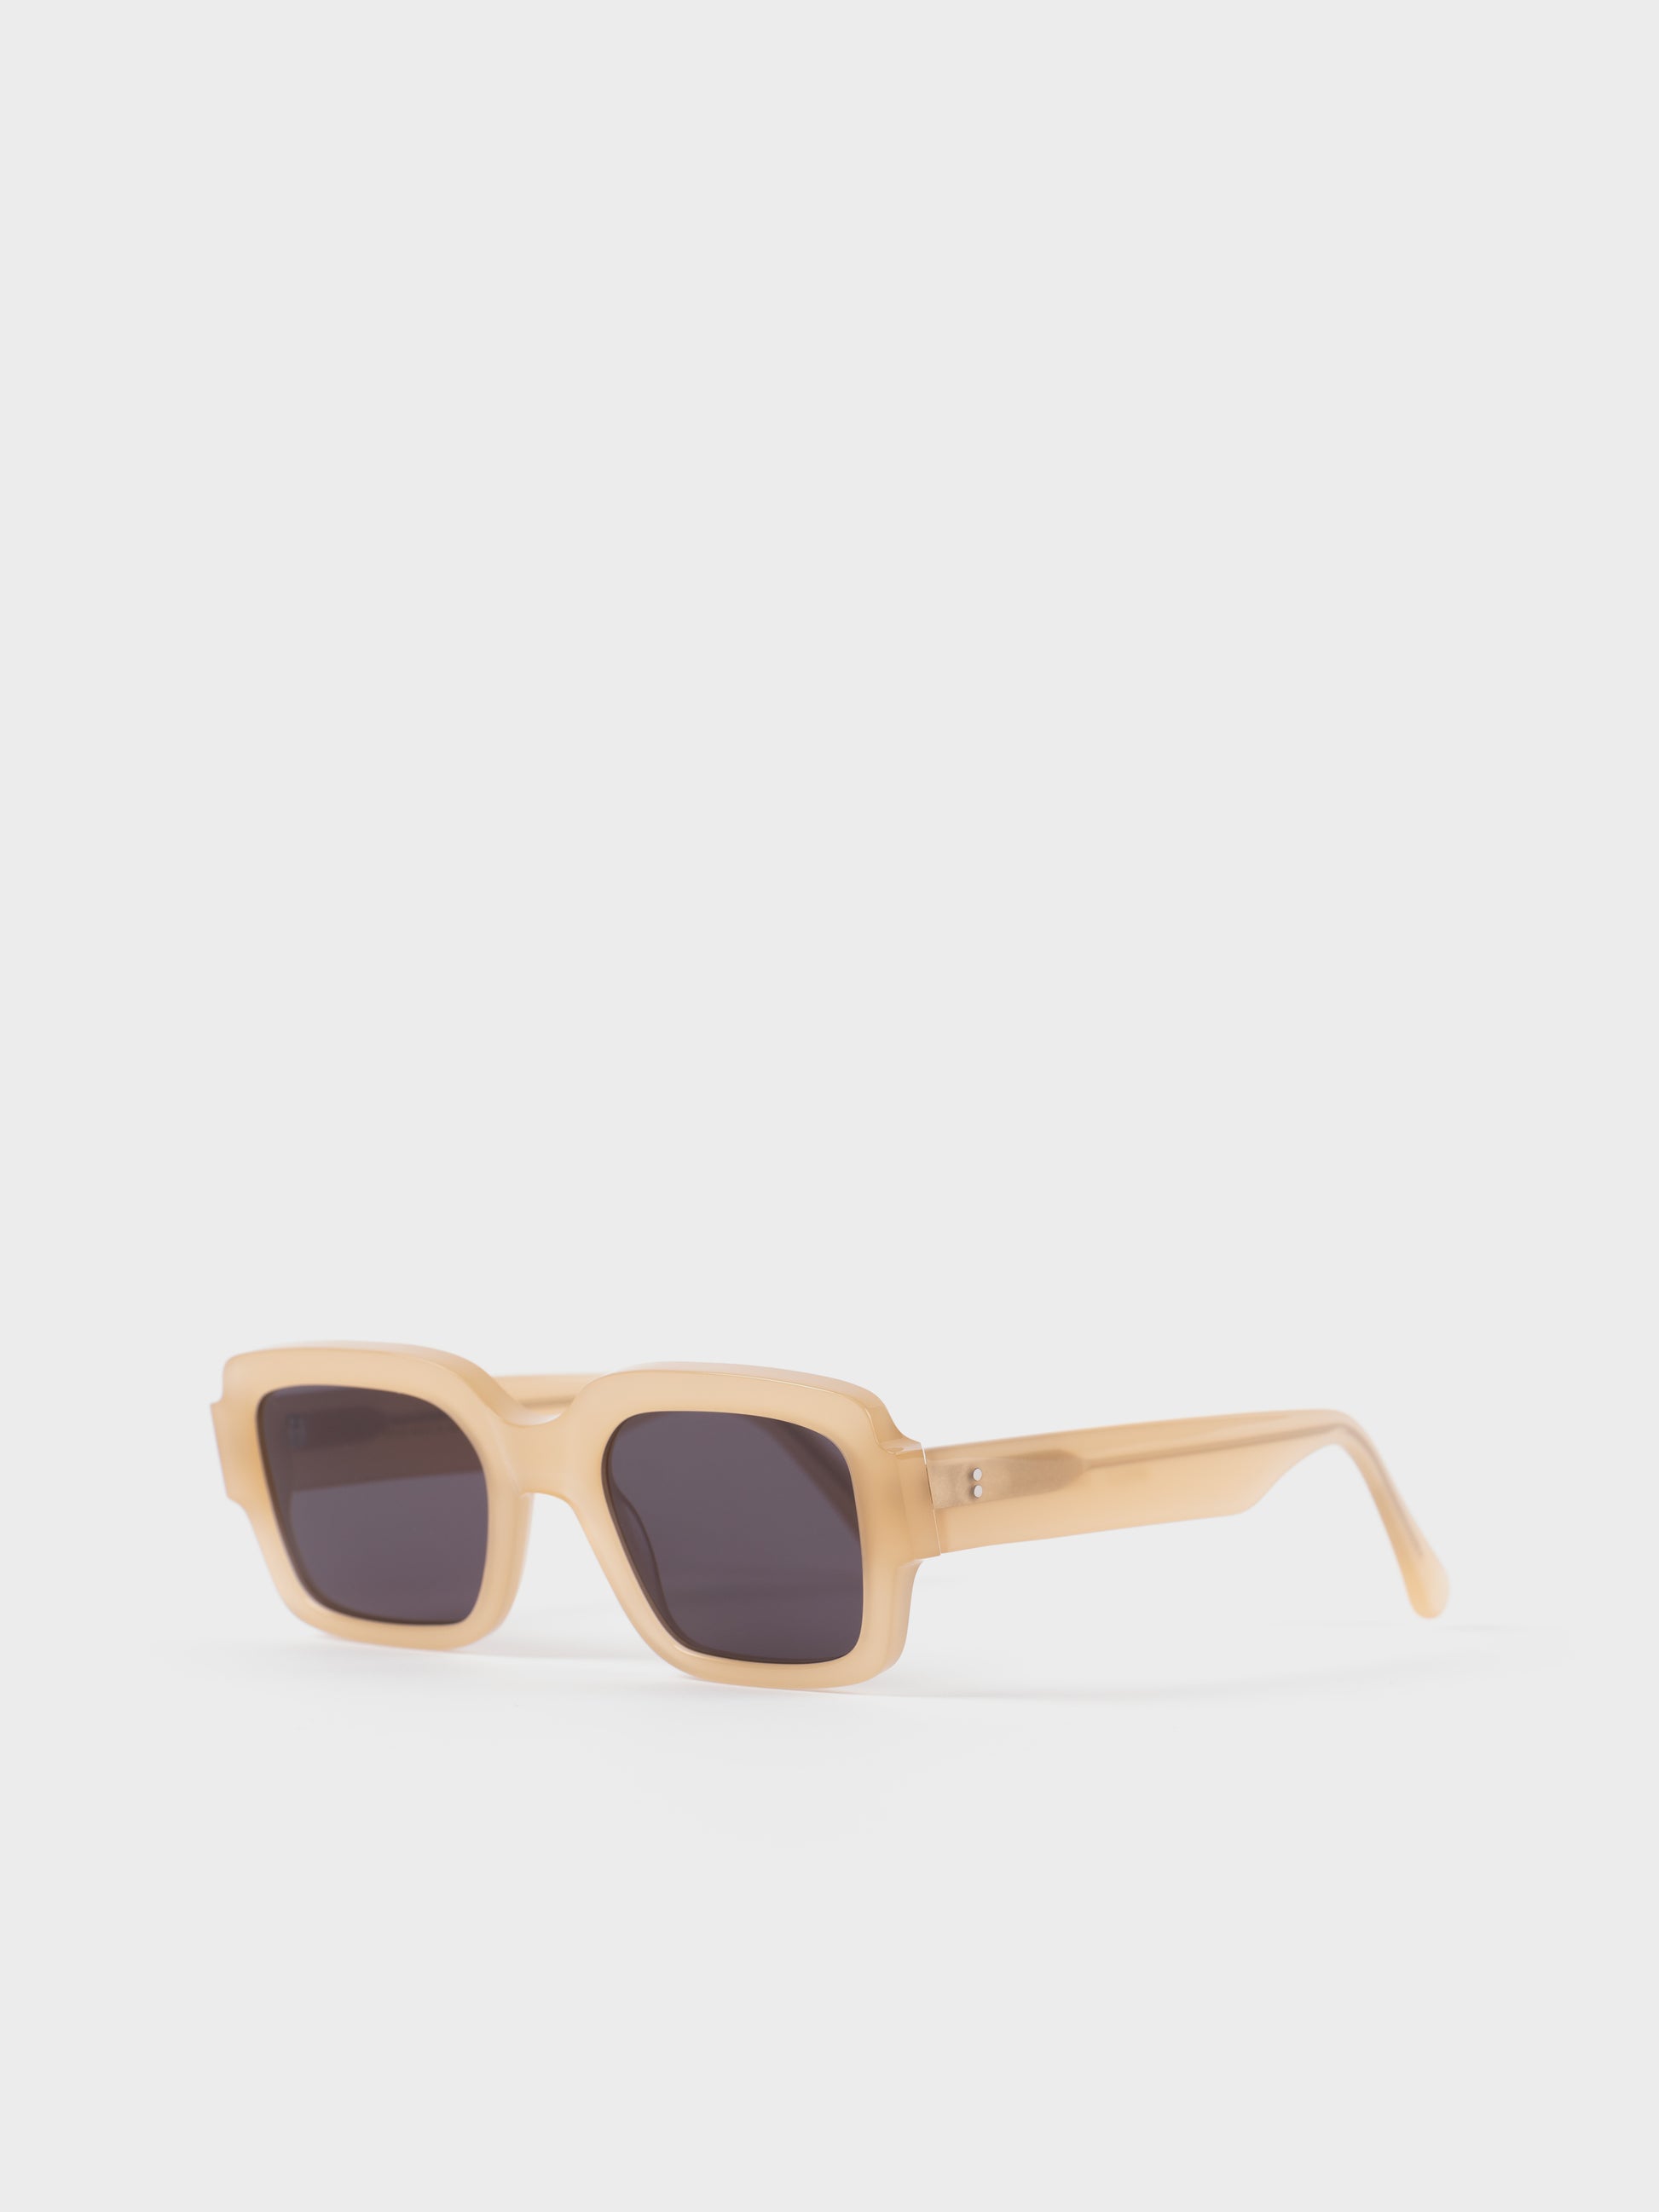 Monokel Sunglasses - Apollo Sand/Grey Lens